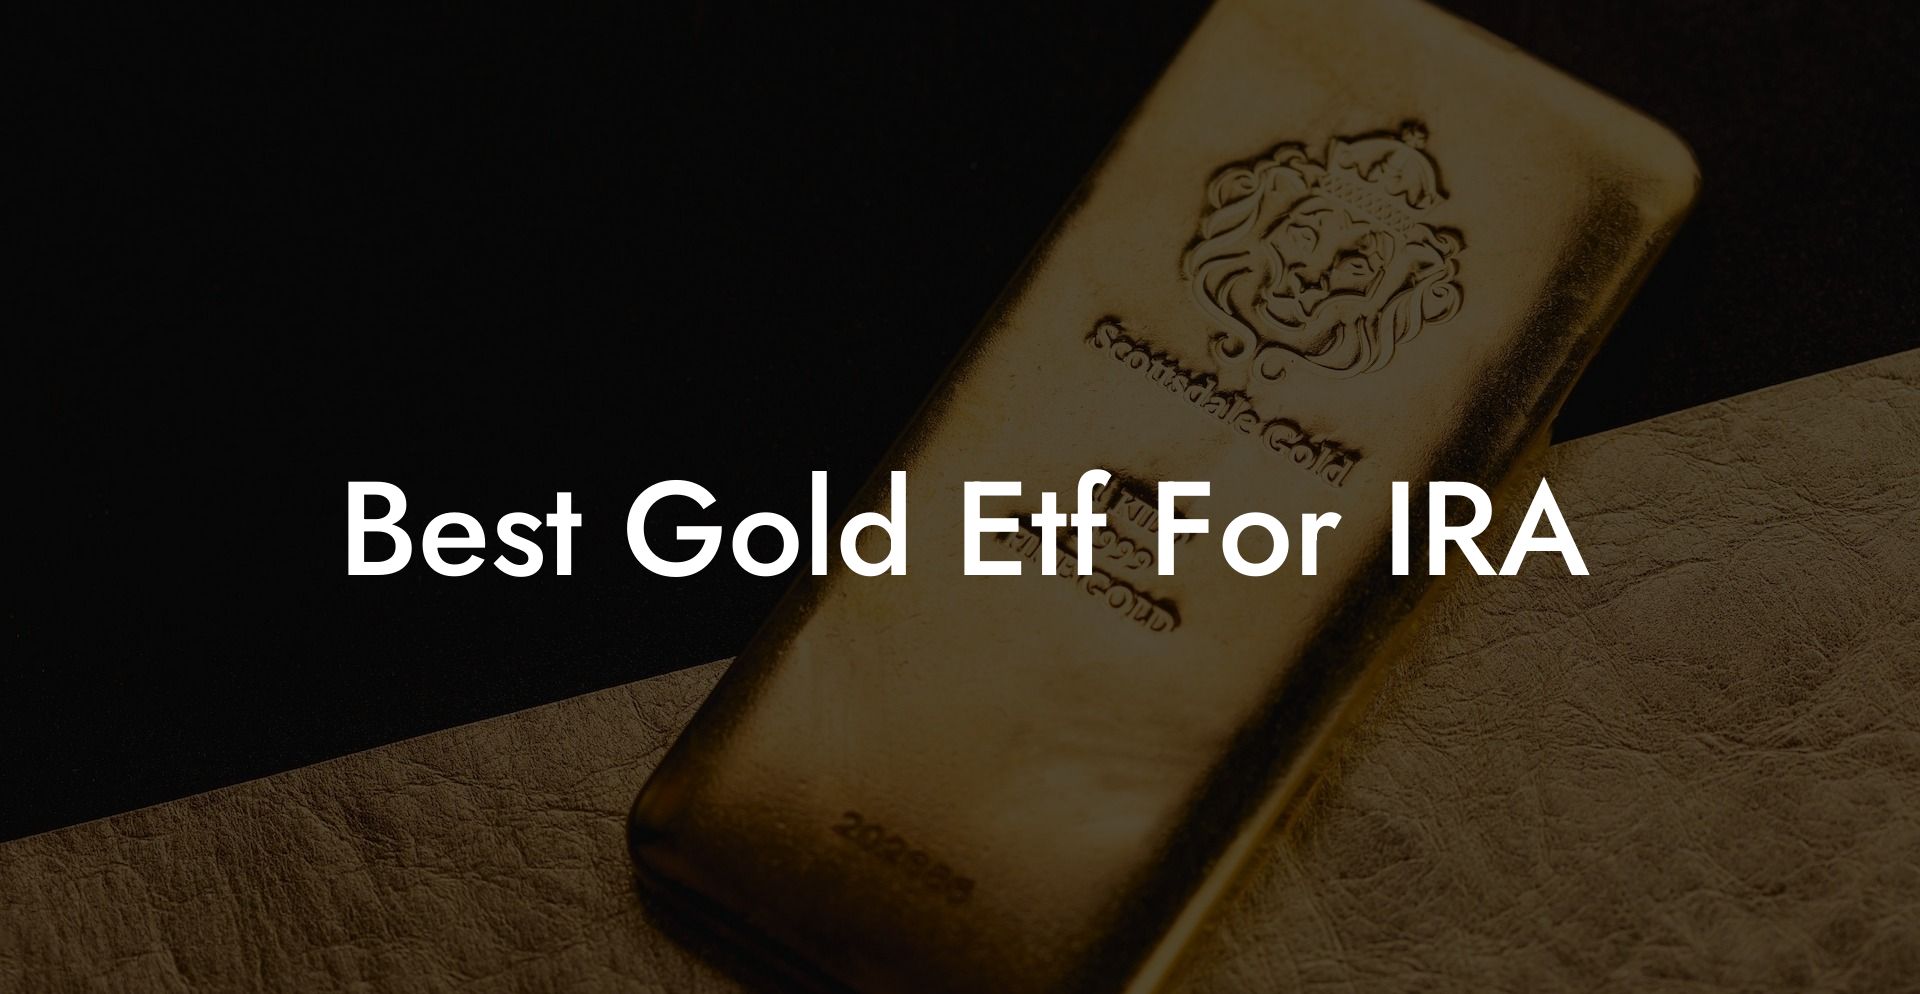 Best Gold Etf For IRA